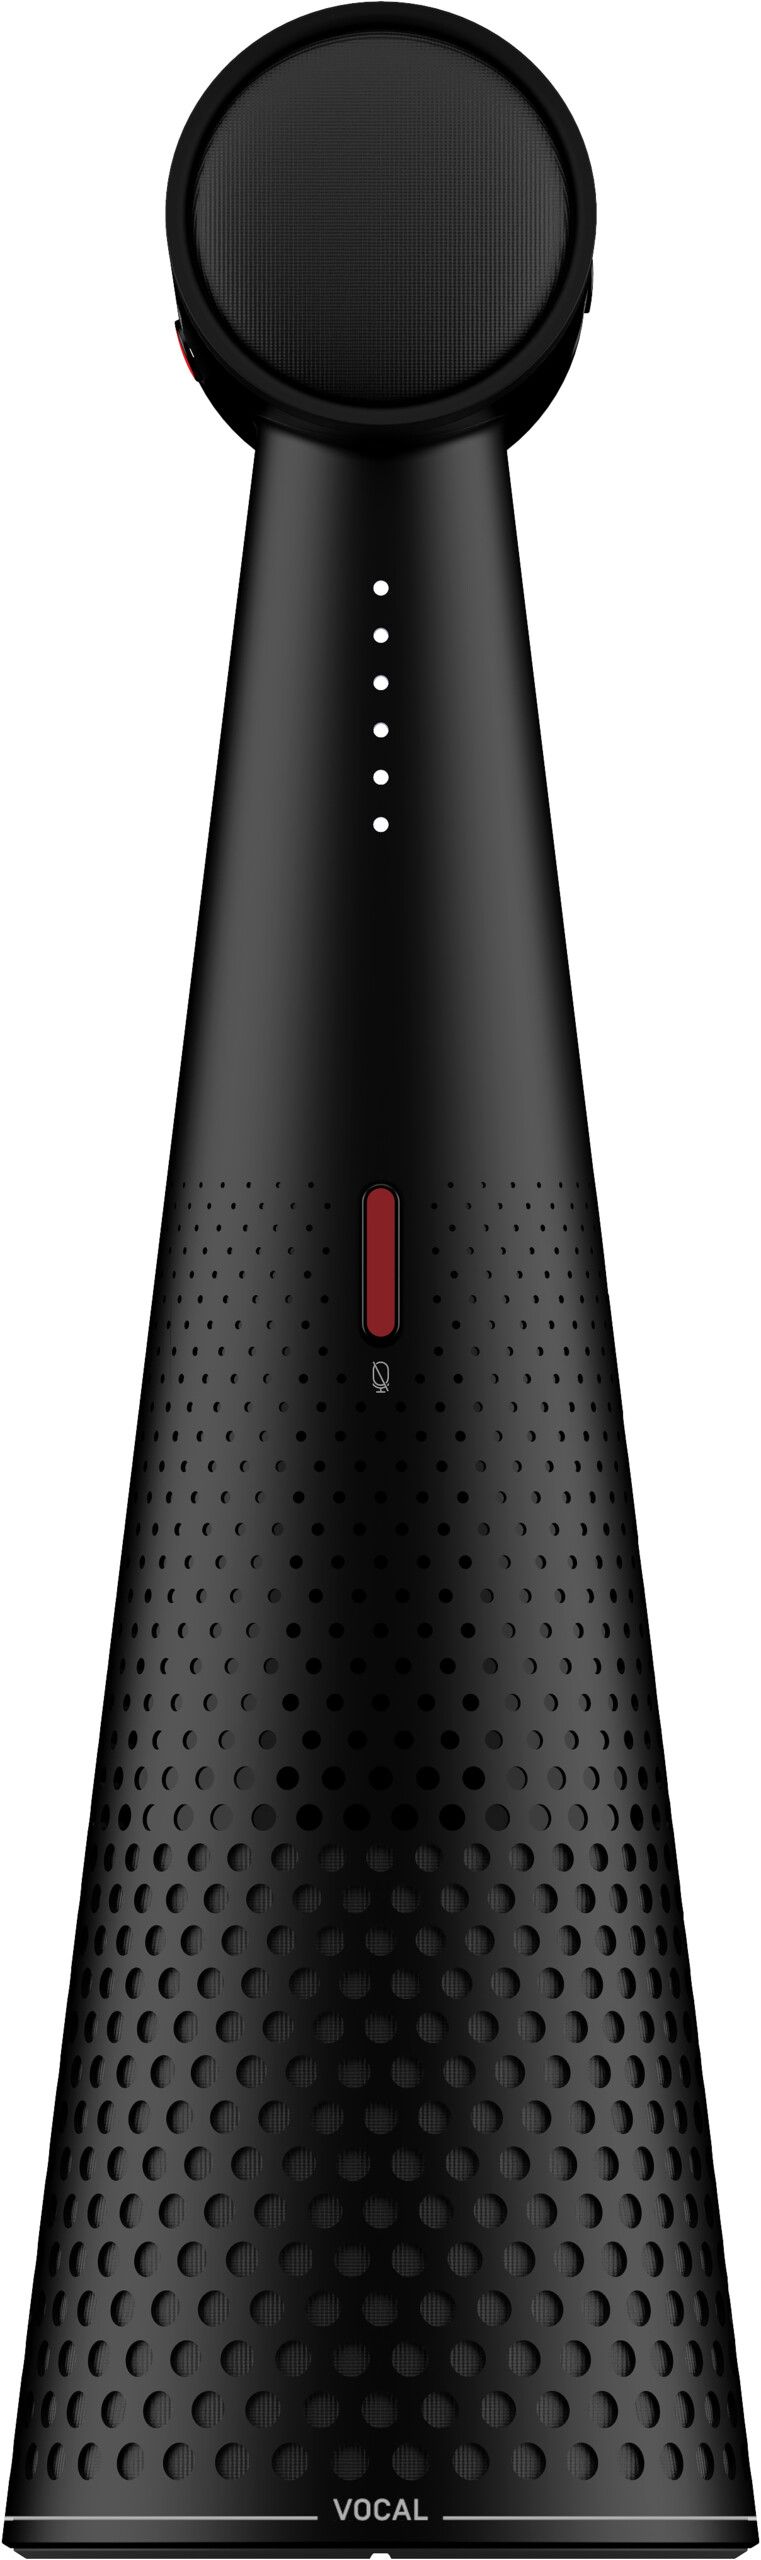 IPEVO Vocal AI Beamforming Bluetooth-høyttalertelefon